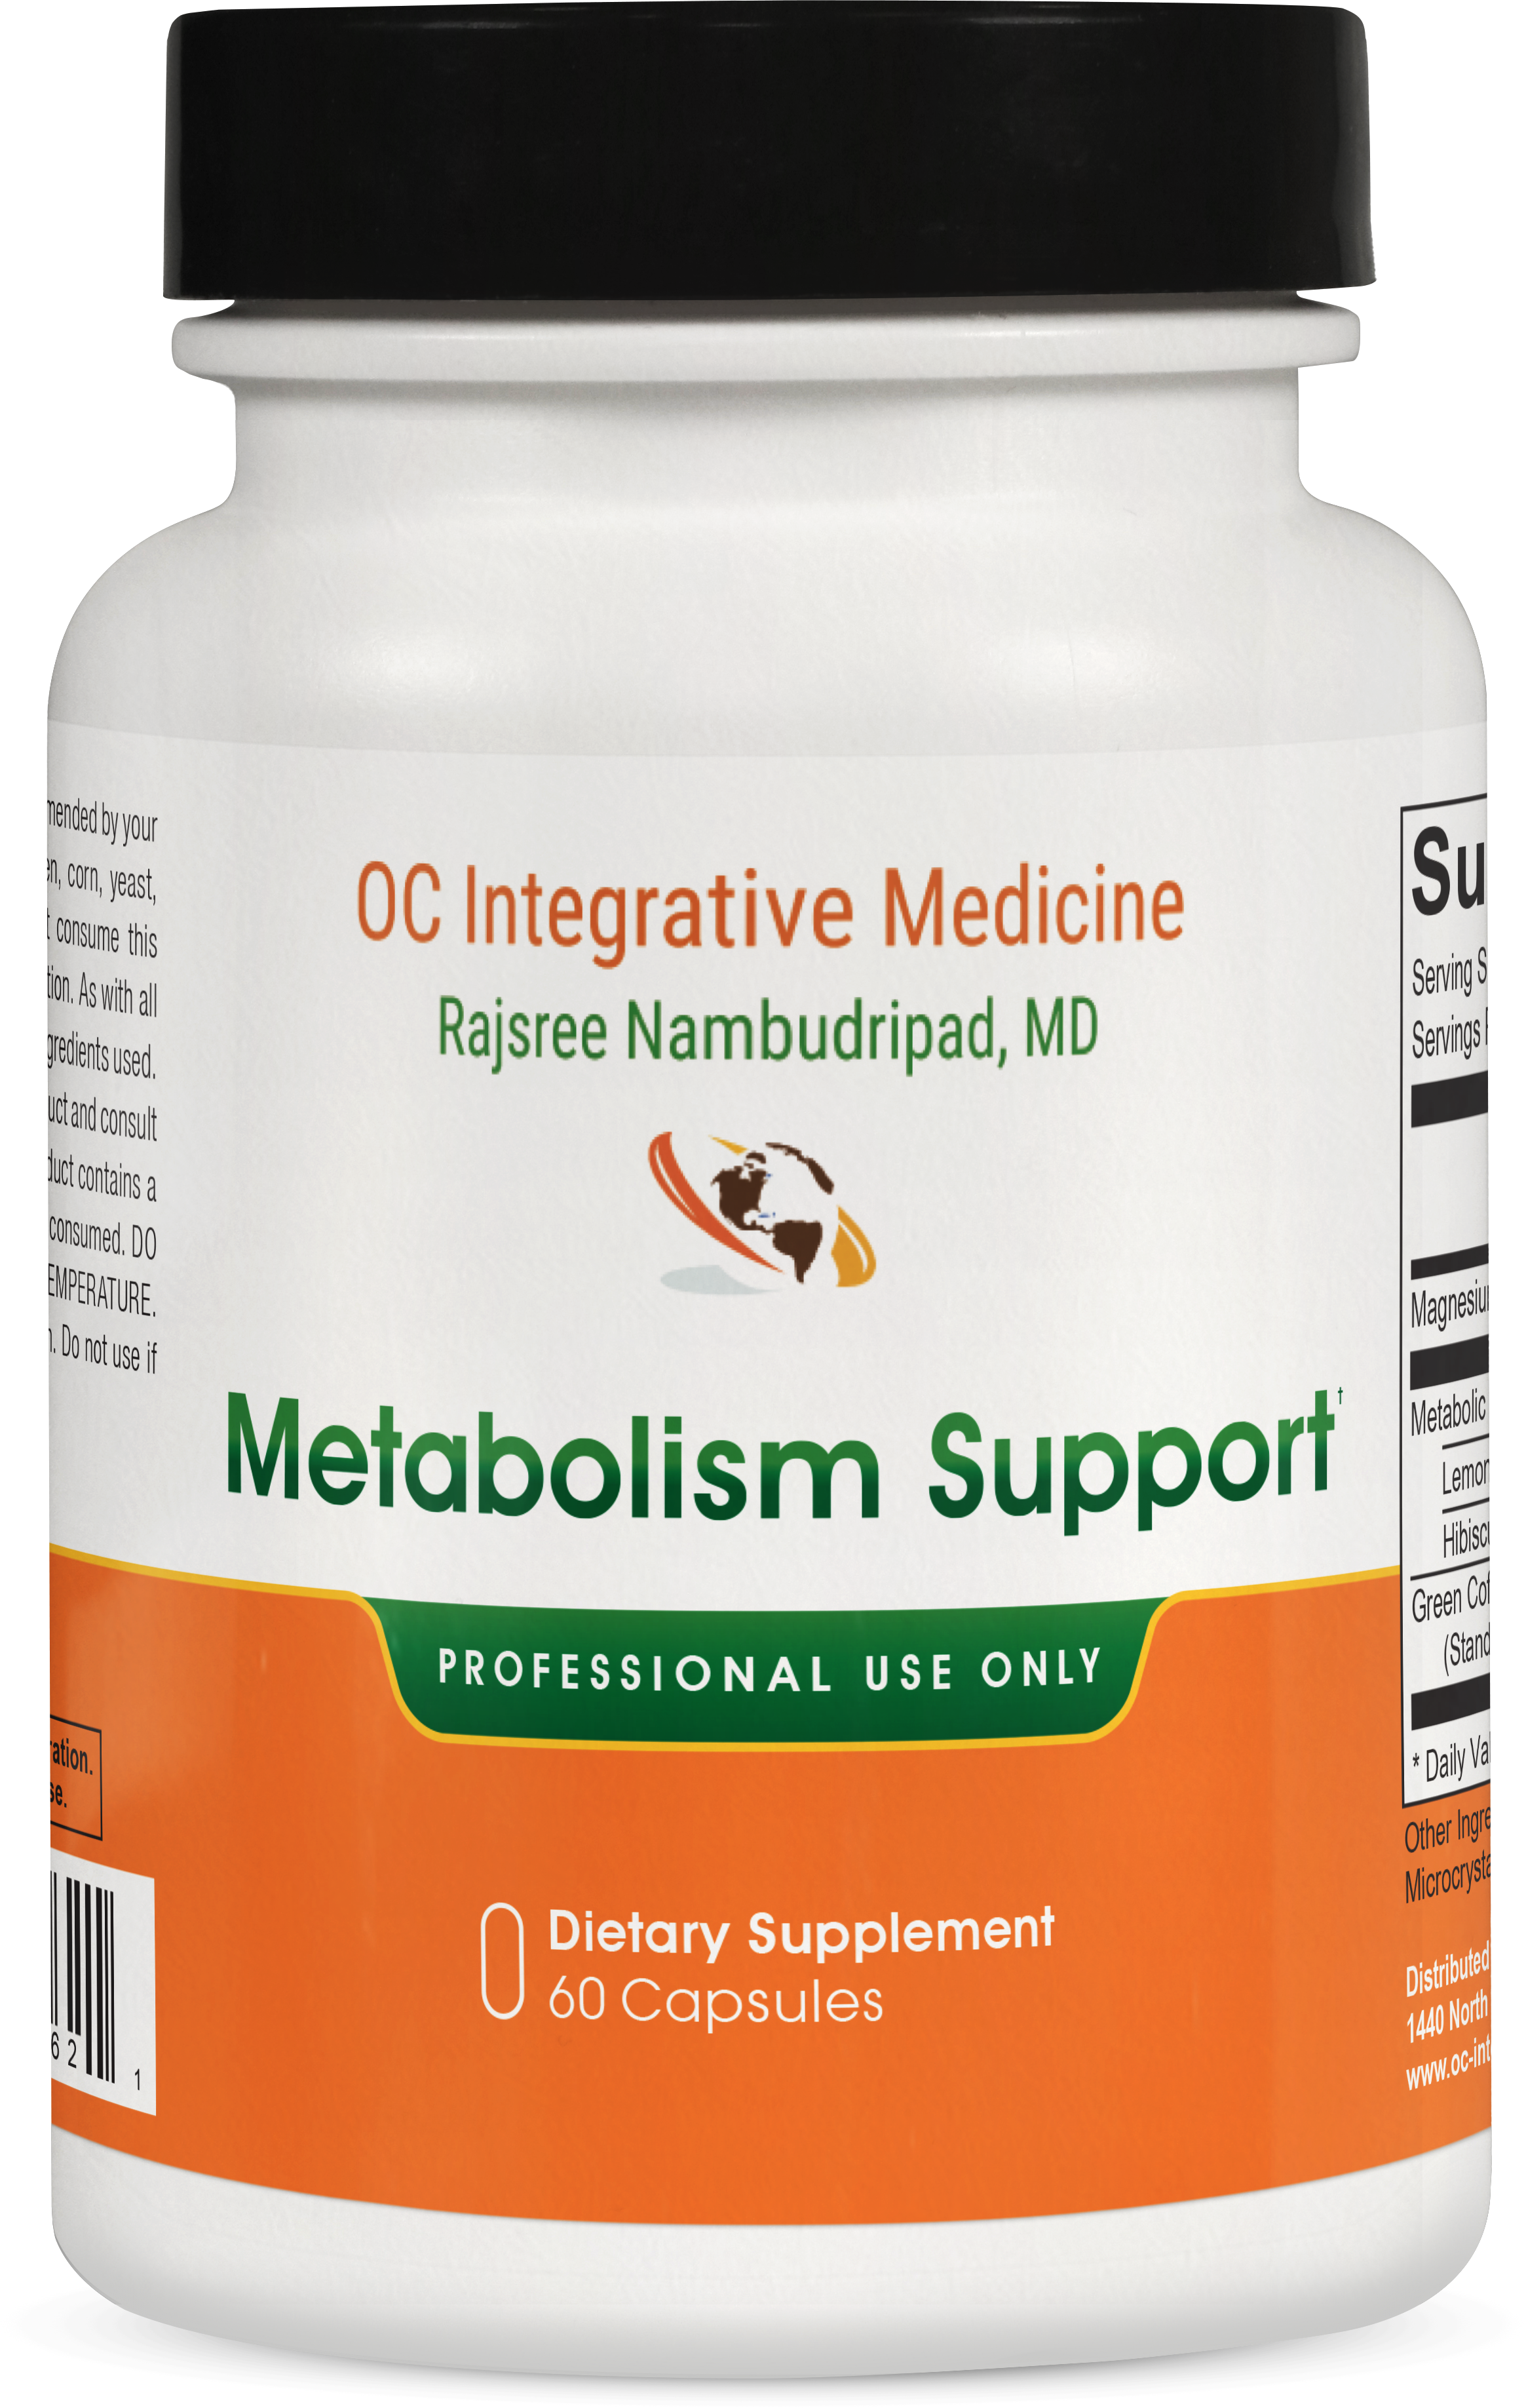 Metabolism support